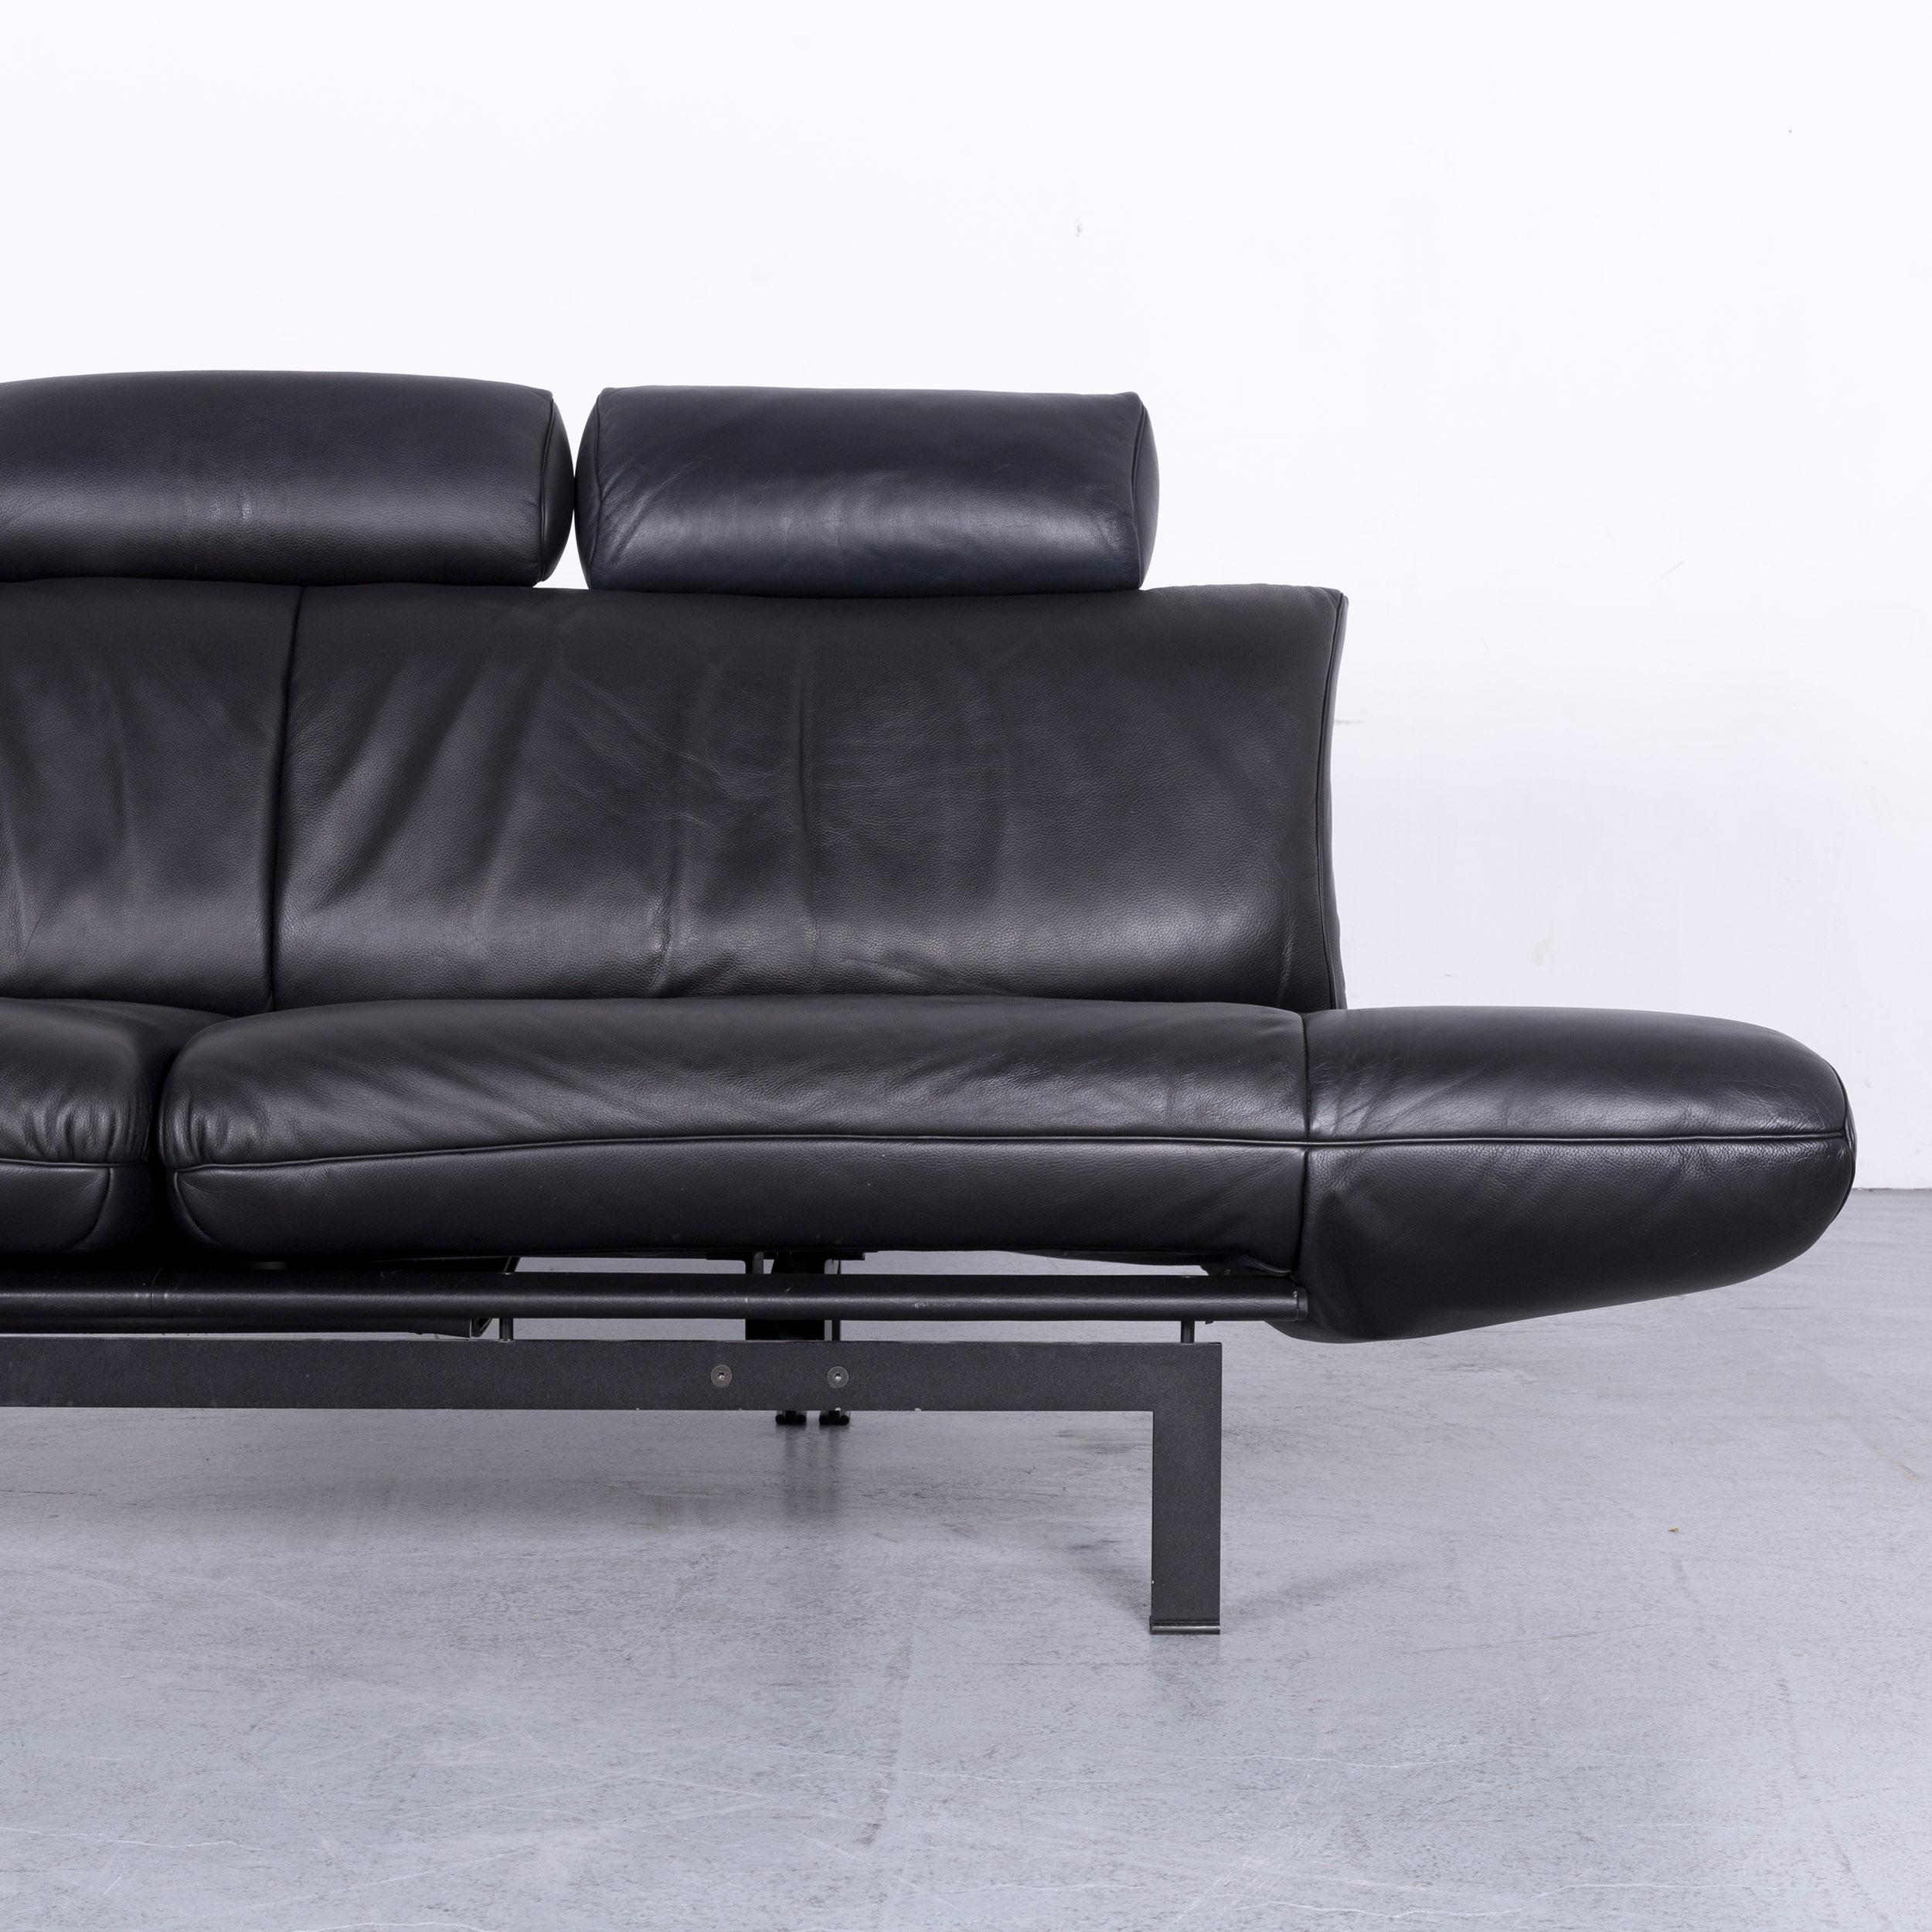 De Sede Ds 140 Designer Leather Sofa Black Three-Seat Function Modern For Sale 4